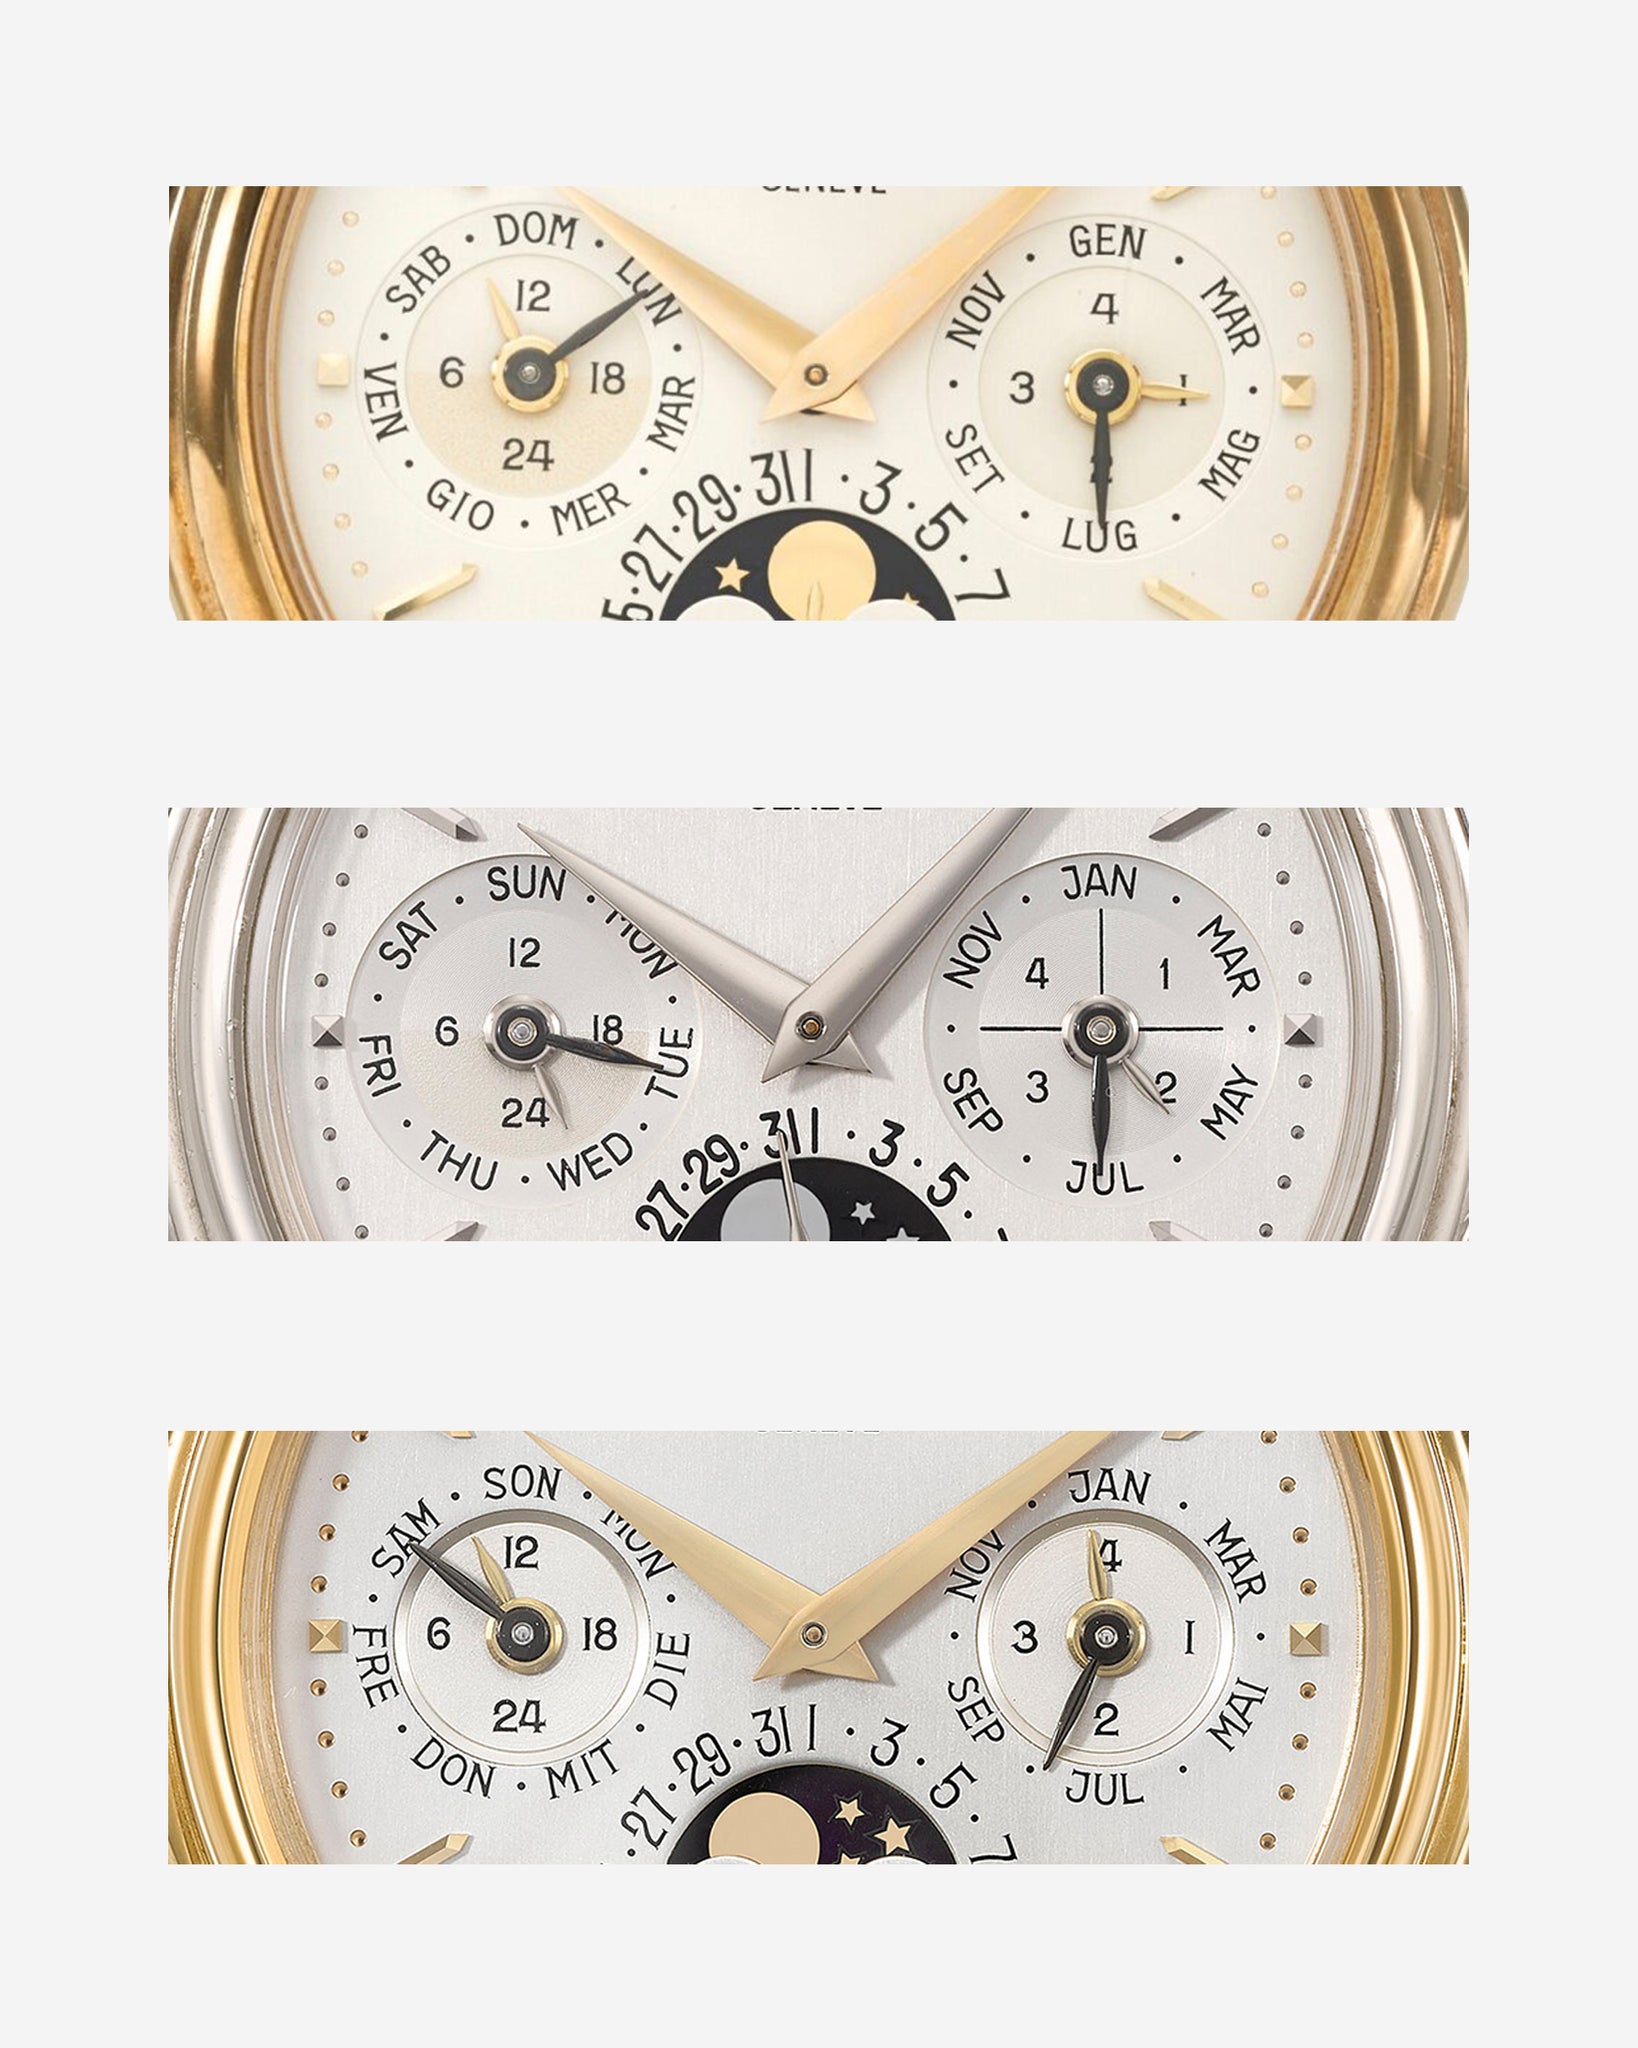 Patek Philippe 3940 dials in Italian, English and German